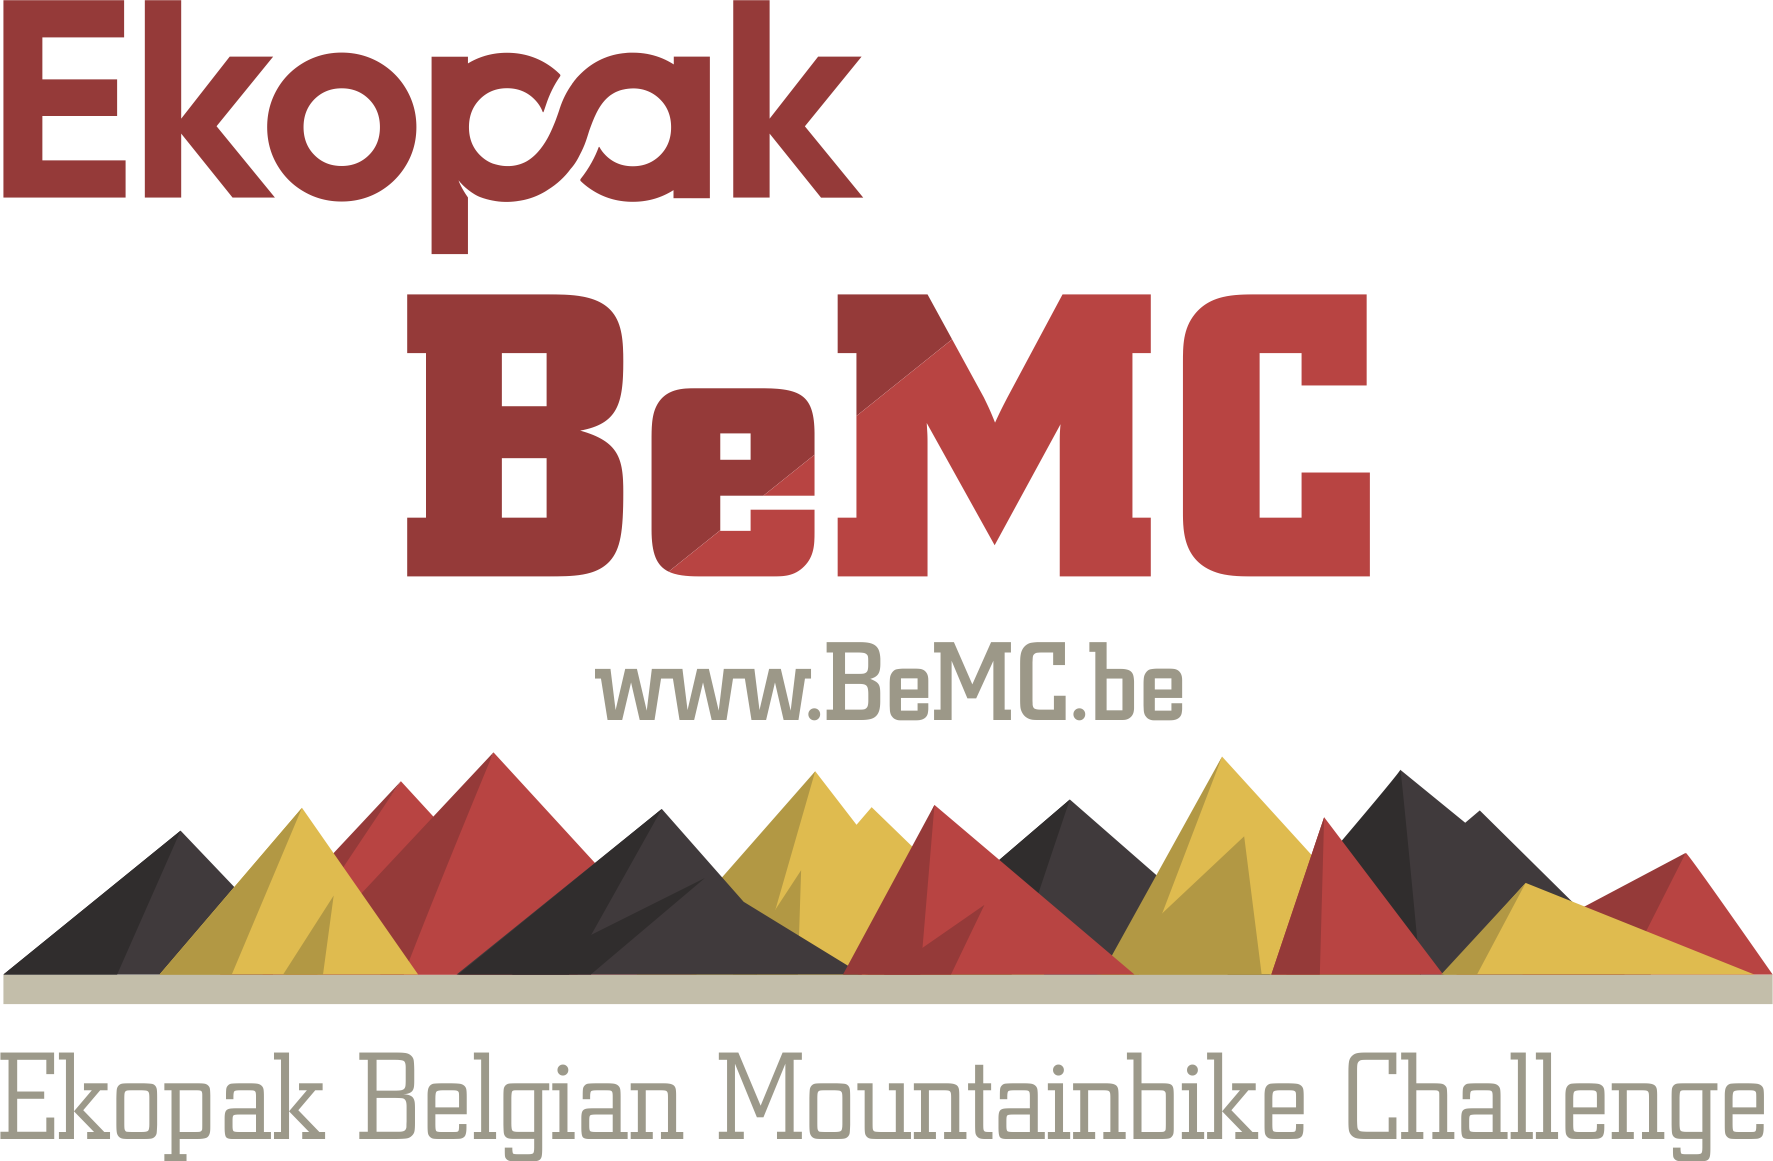 Ekopak Belgian Mountainbike Challenge